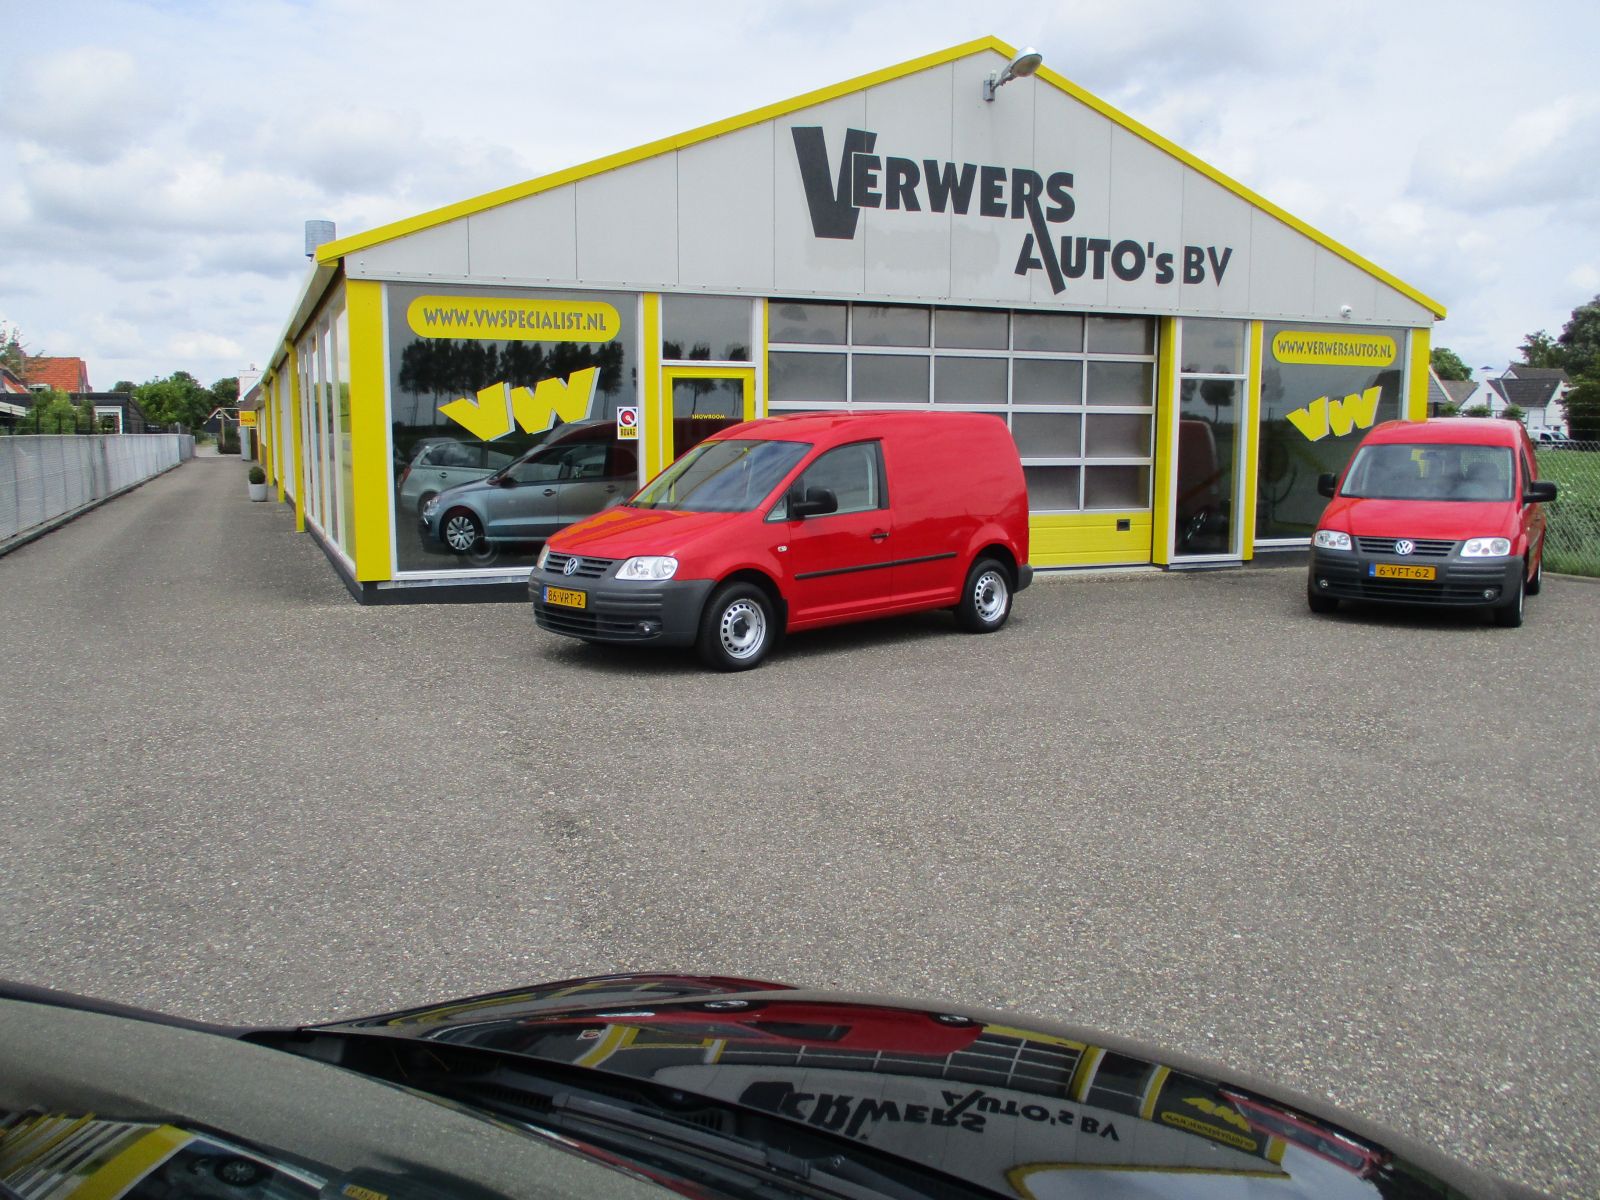 Verwers Auto's BV logo